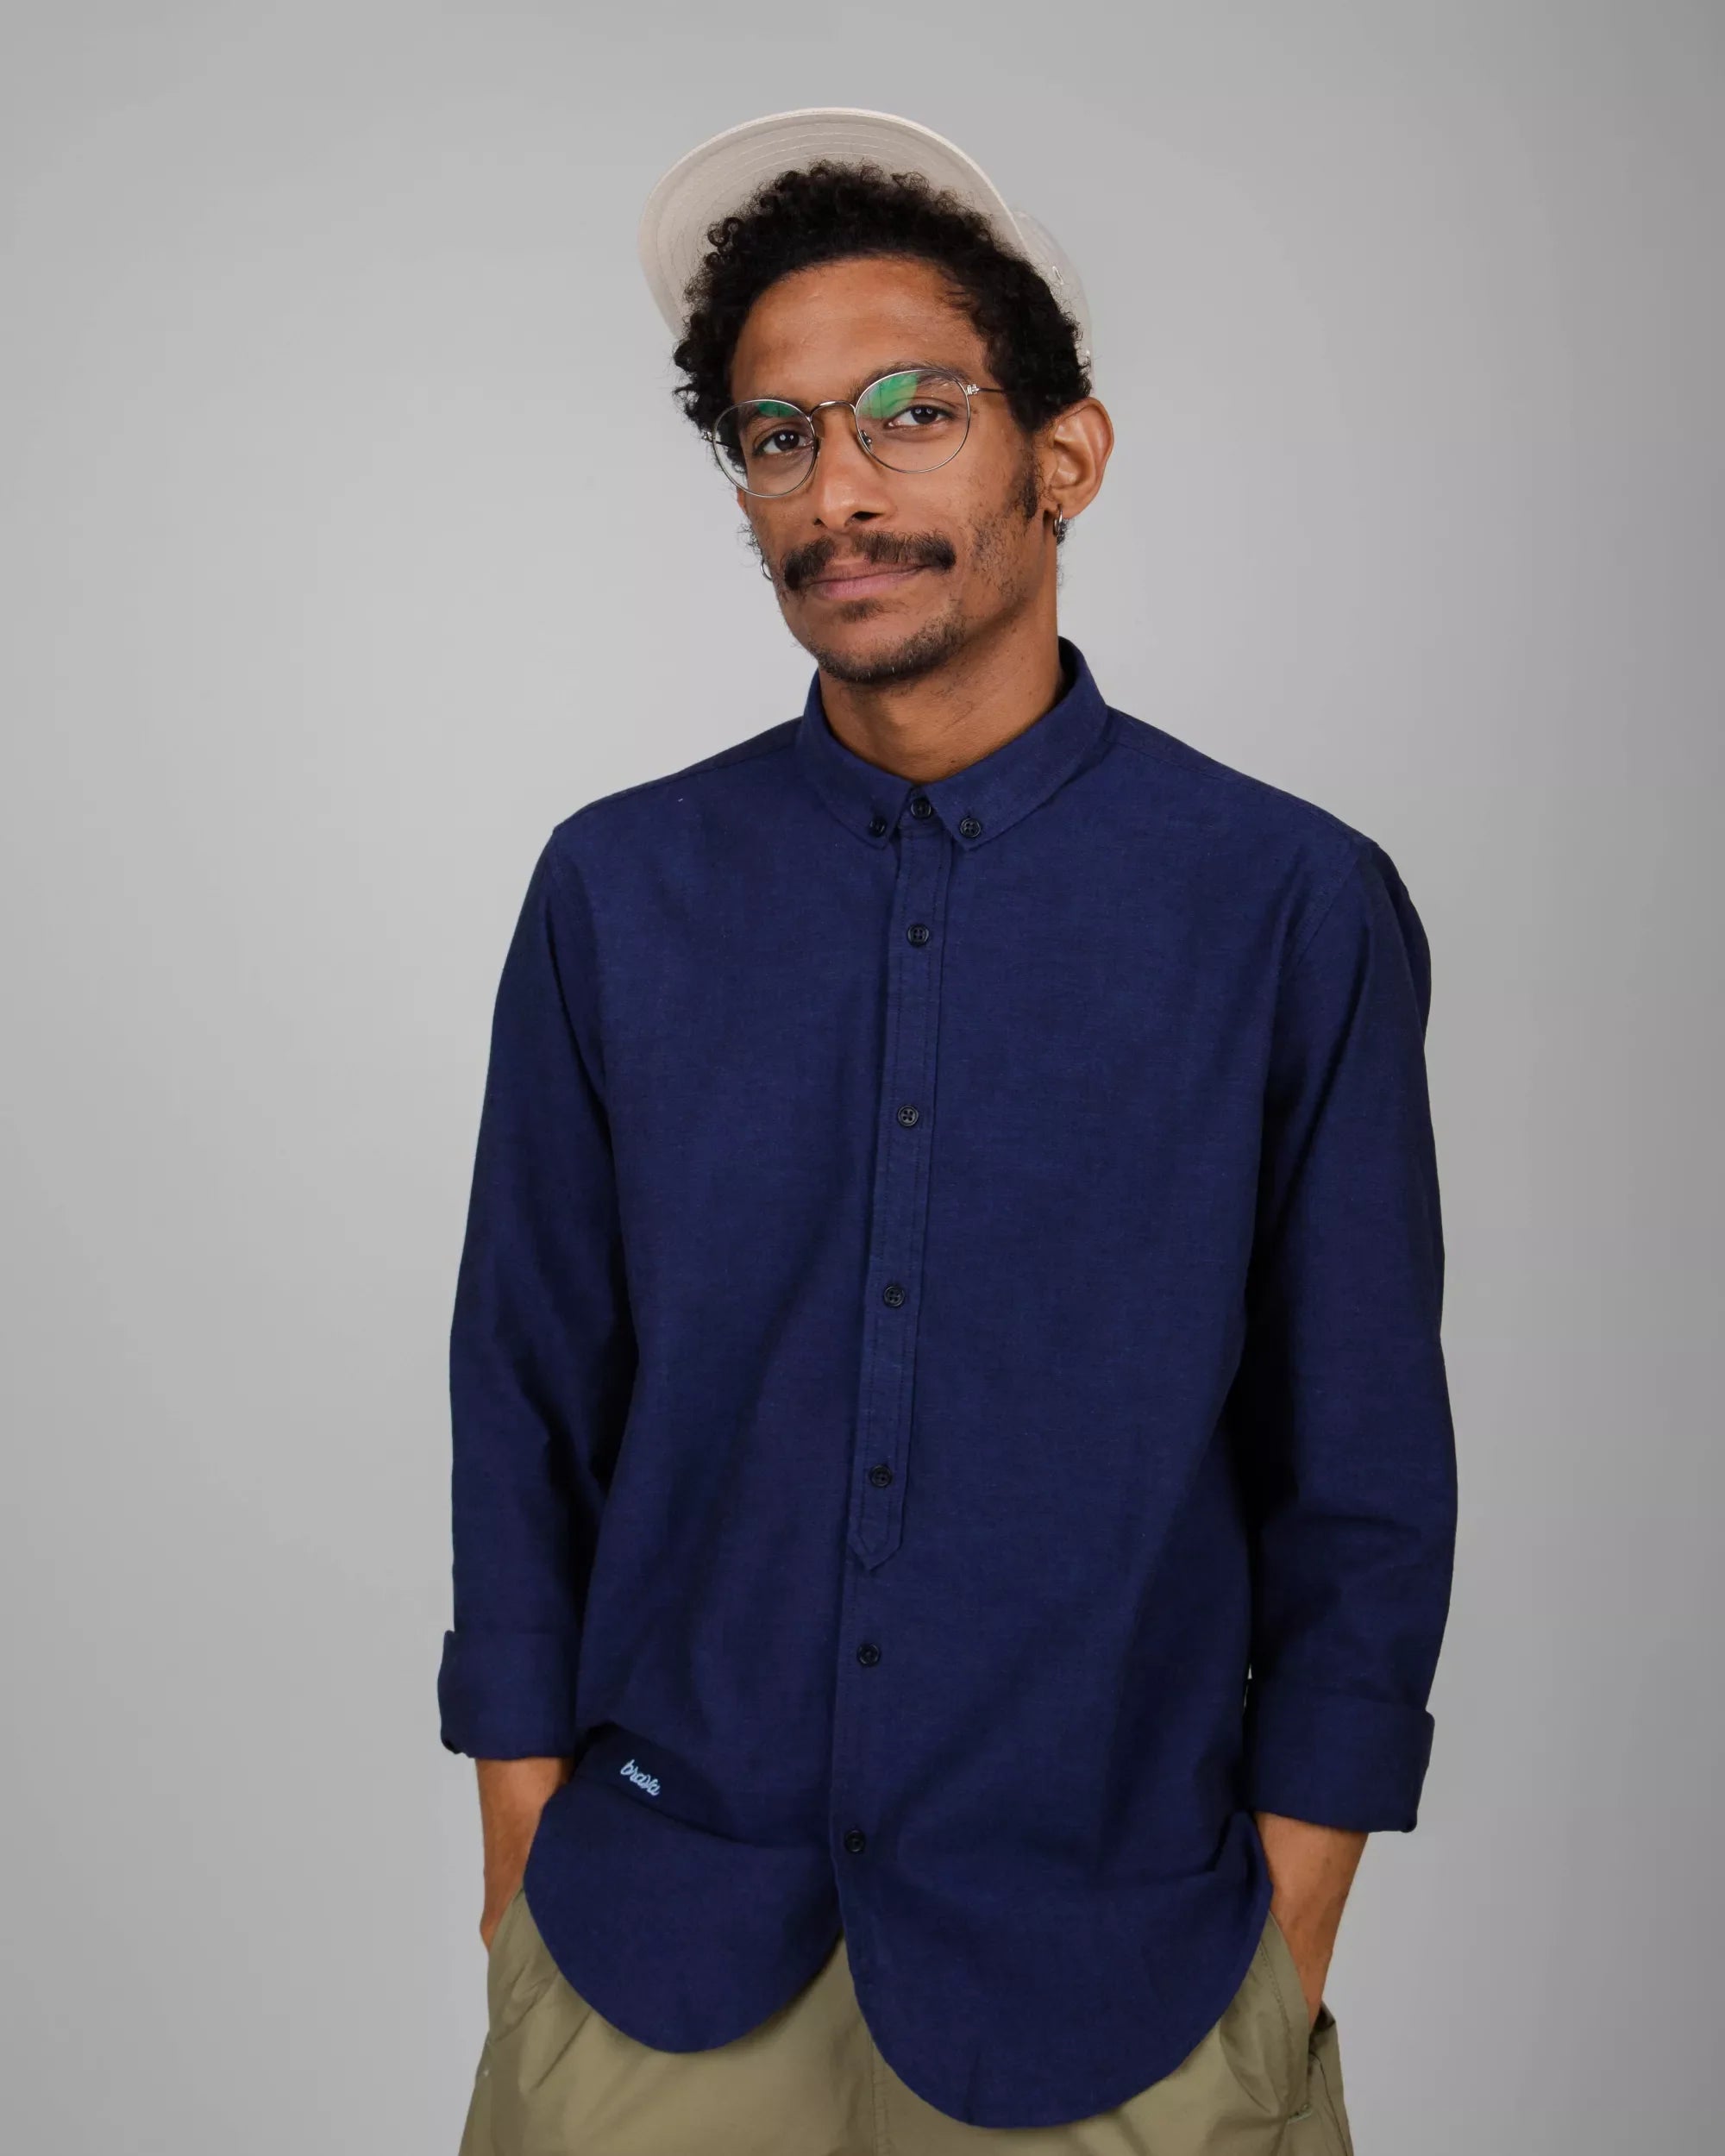 Dark blue, long-sleeved Oxford shirt made from 100% organic cotton from Brava Fabrics